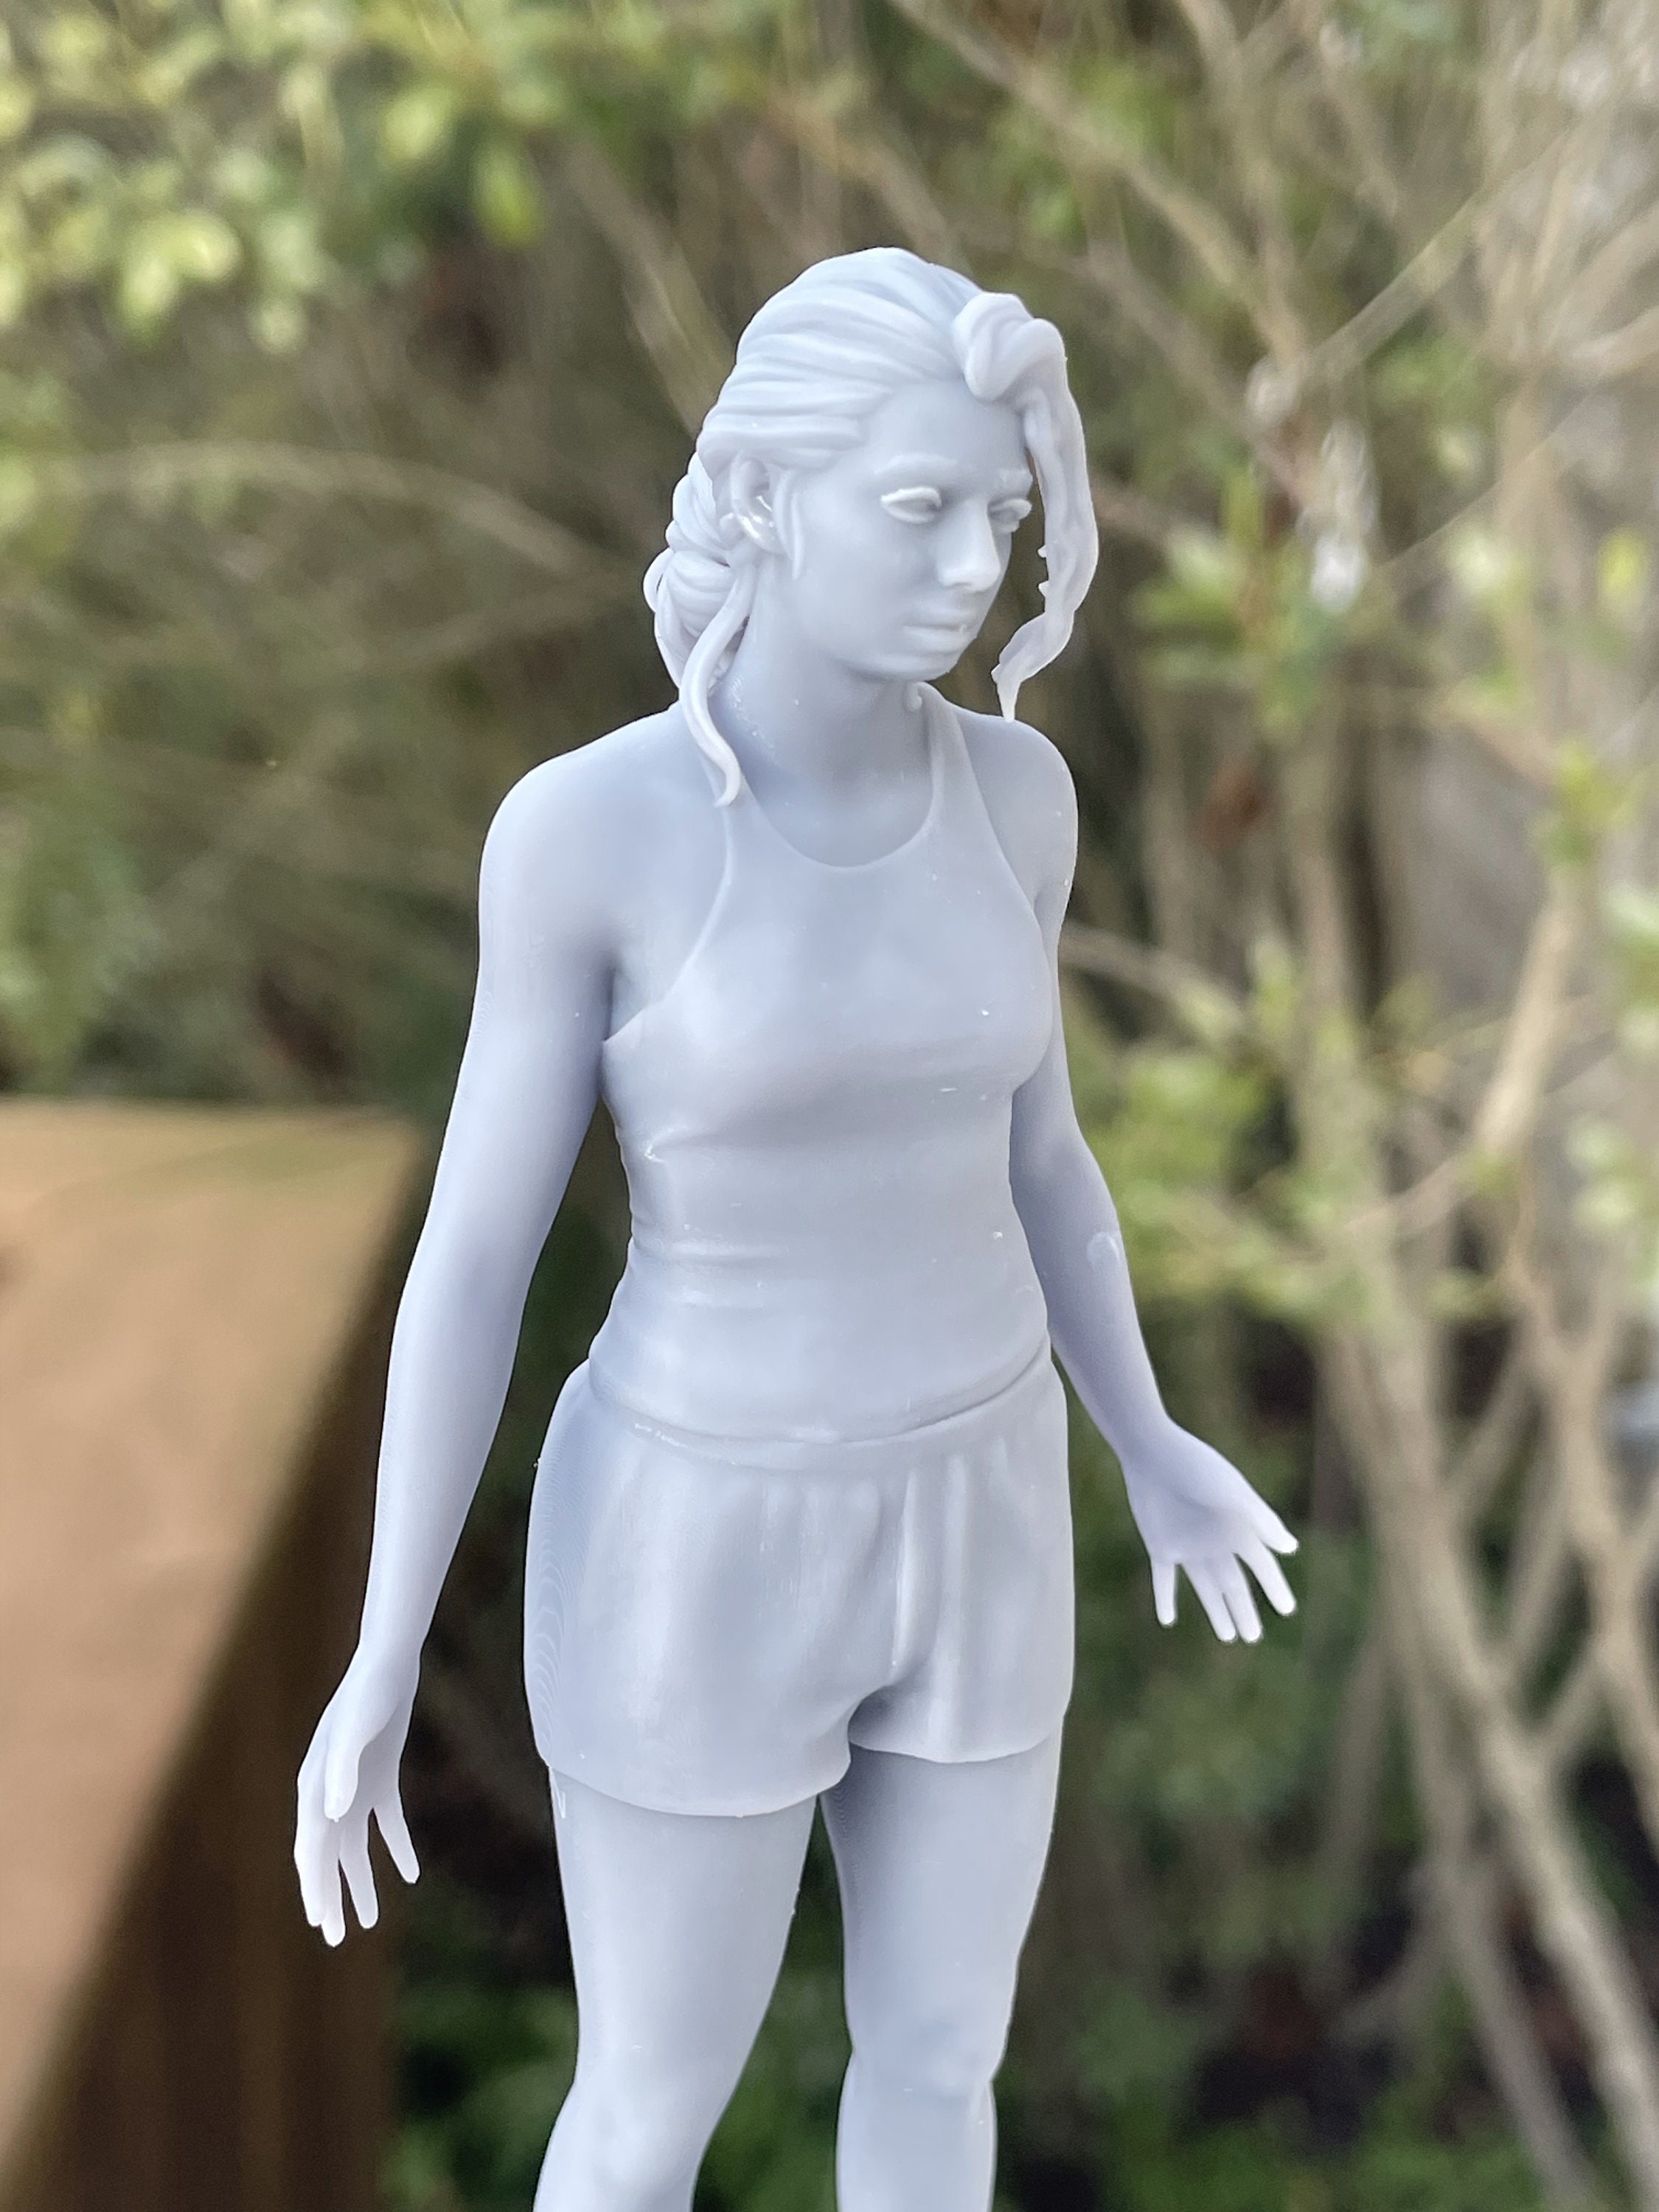 Farm Ellie & Dina the Last of Us 2 3D Resin Printed Statues 